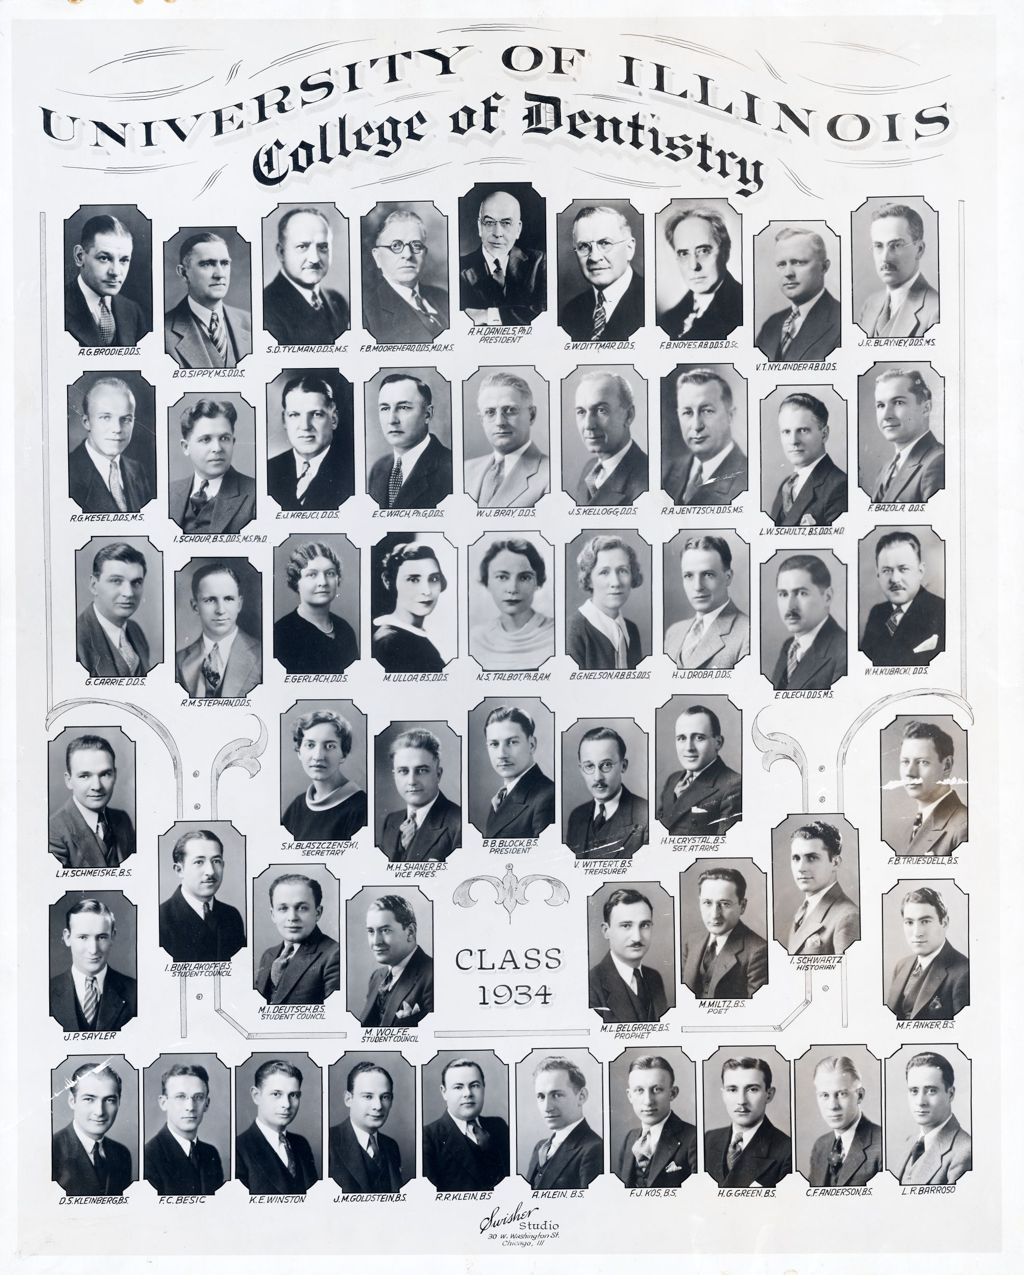 1934 graduating class, University of Illinois College of Dentistry